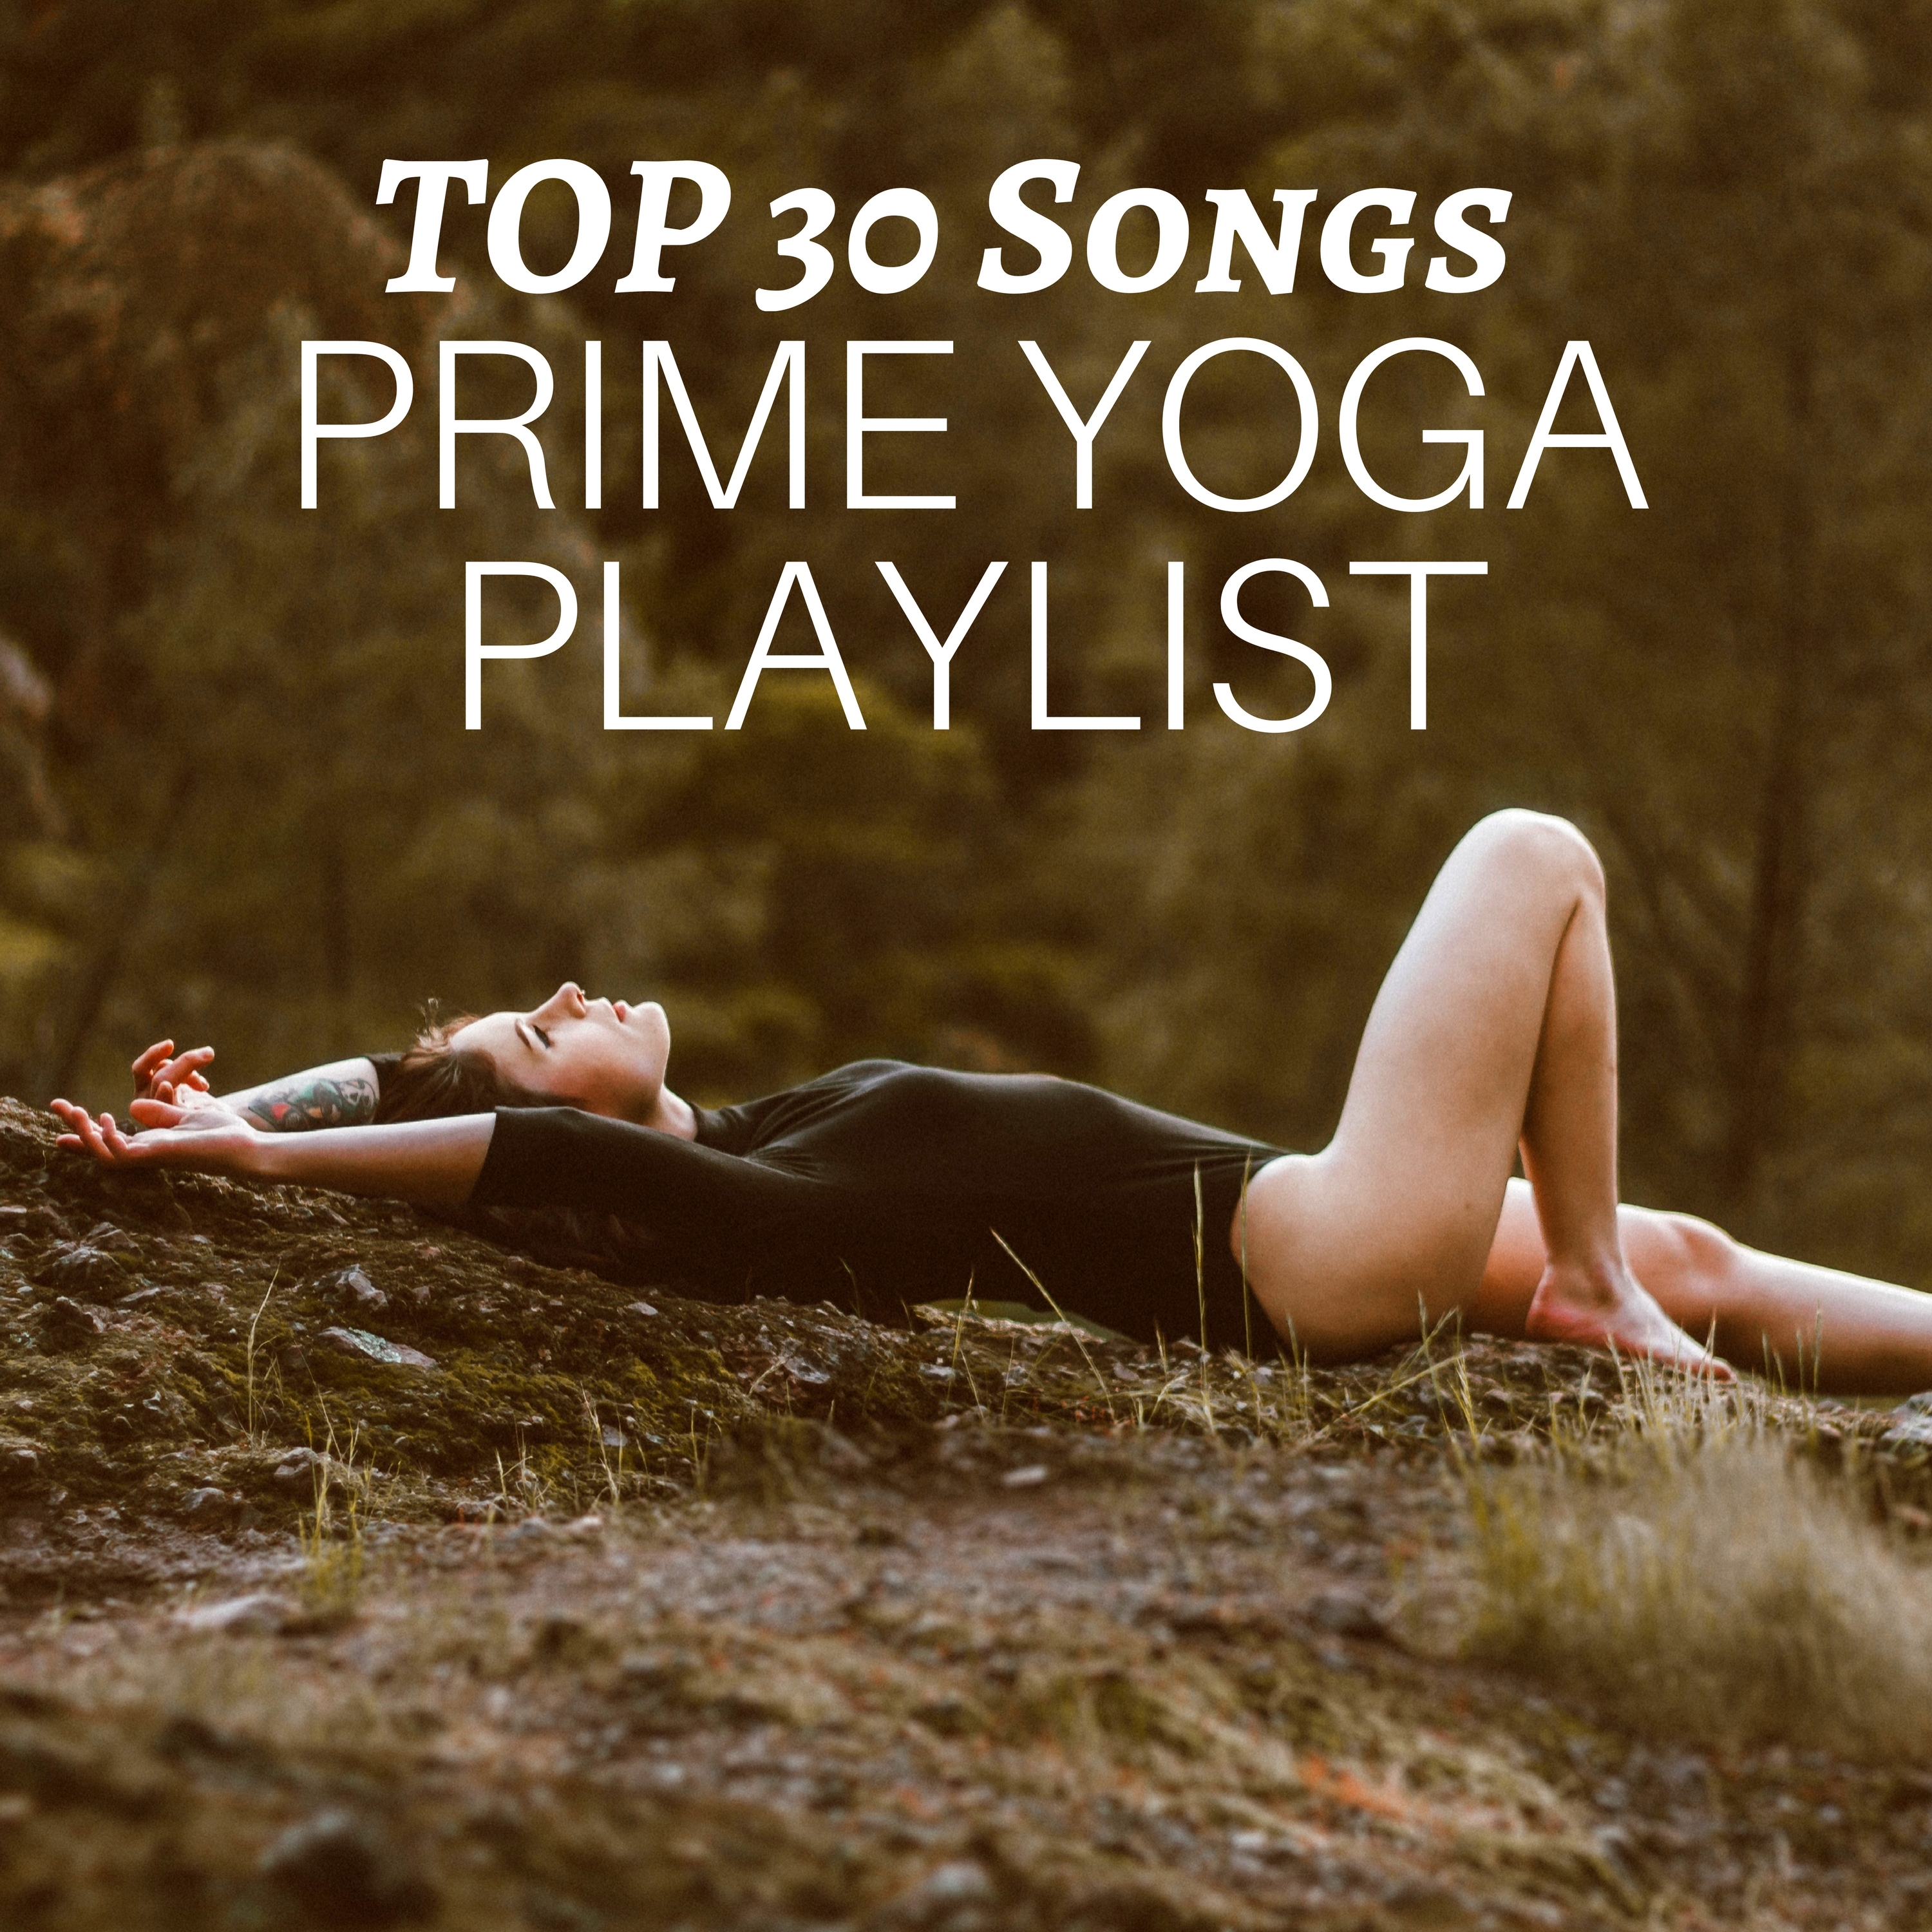 Prime Yoga Playlist - TOP 30 Songs